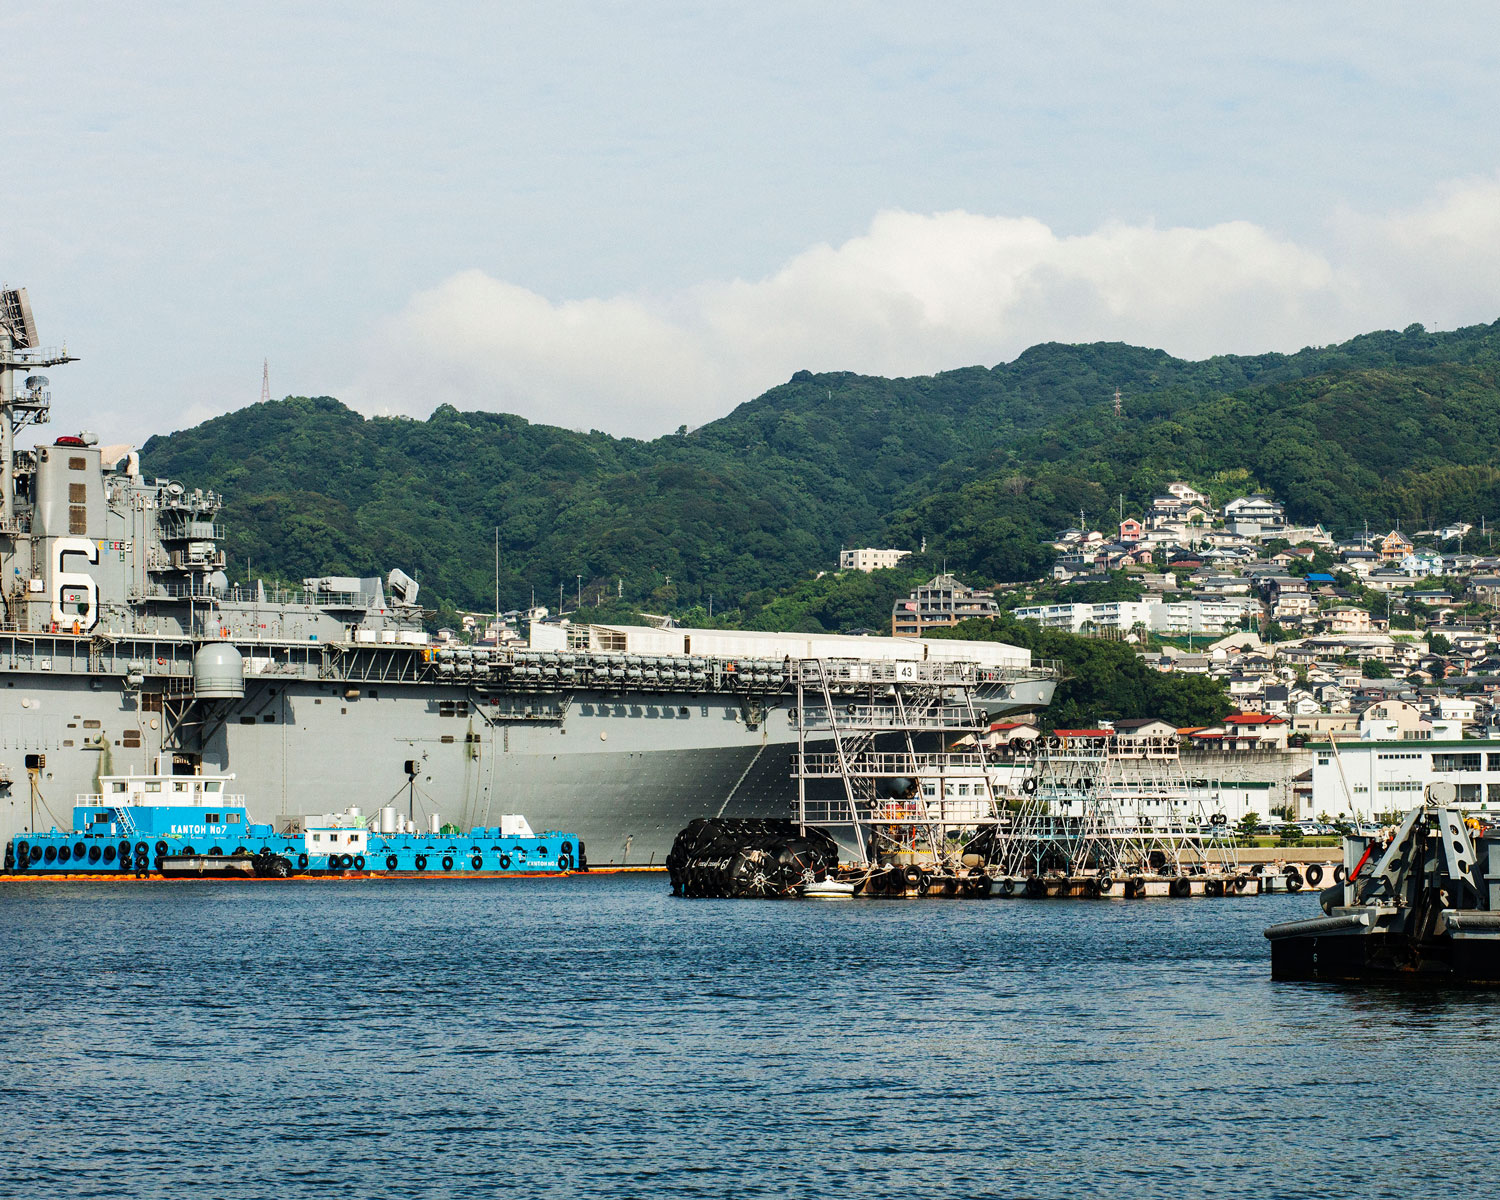   USS Bonhomme Richard in Juliet Basin (Sasebo, Japan 2014)        